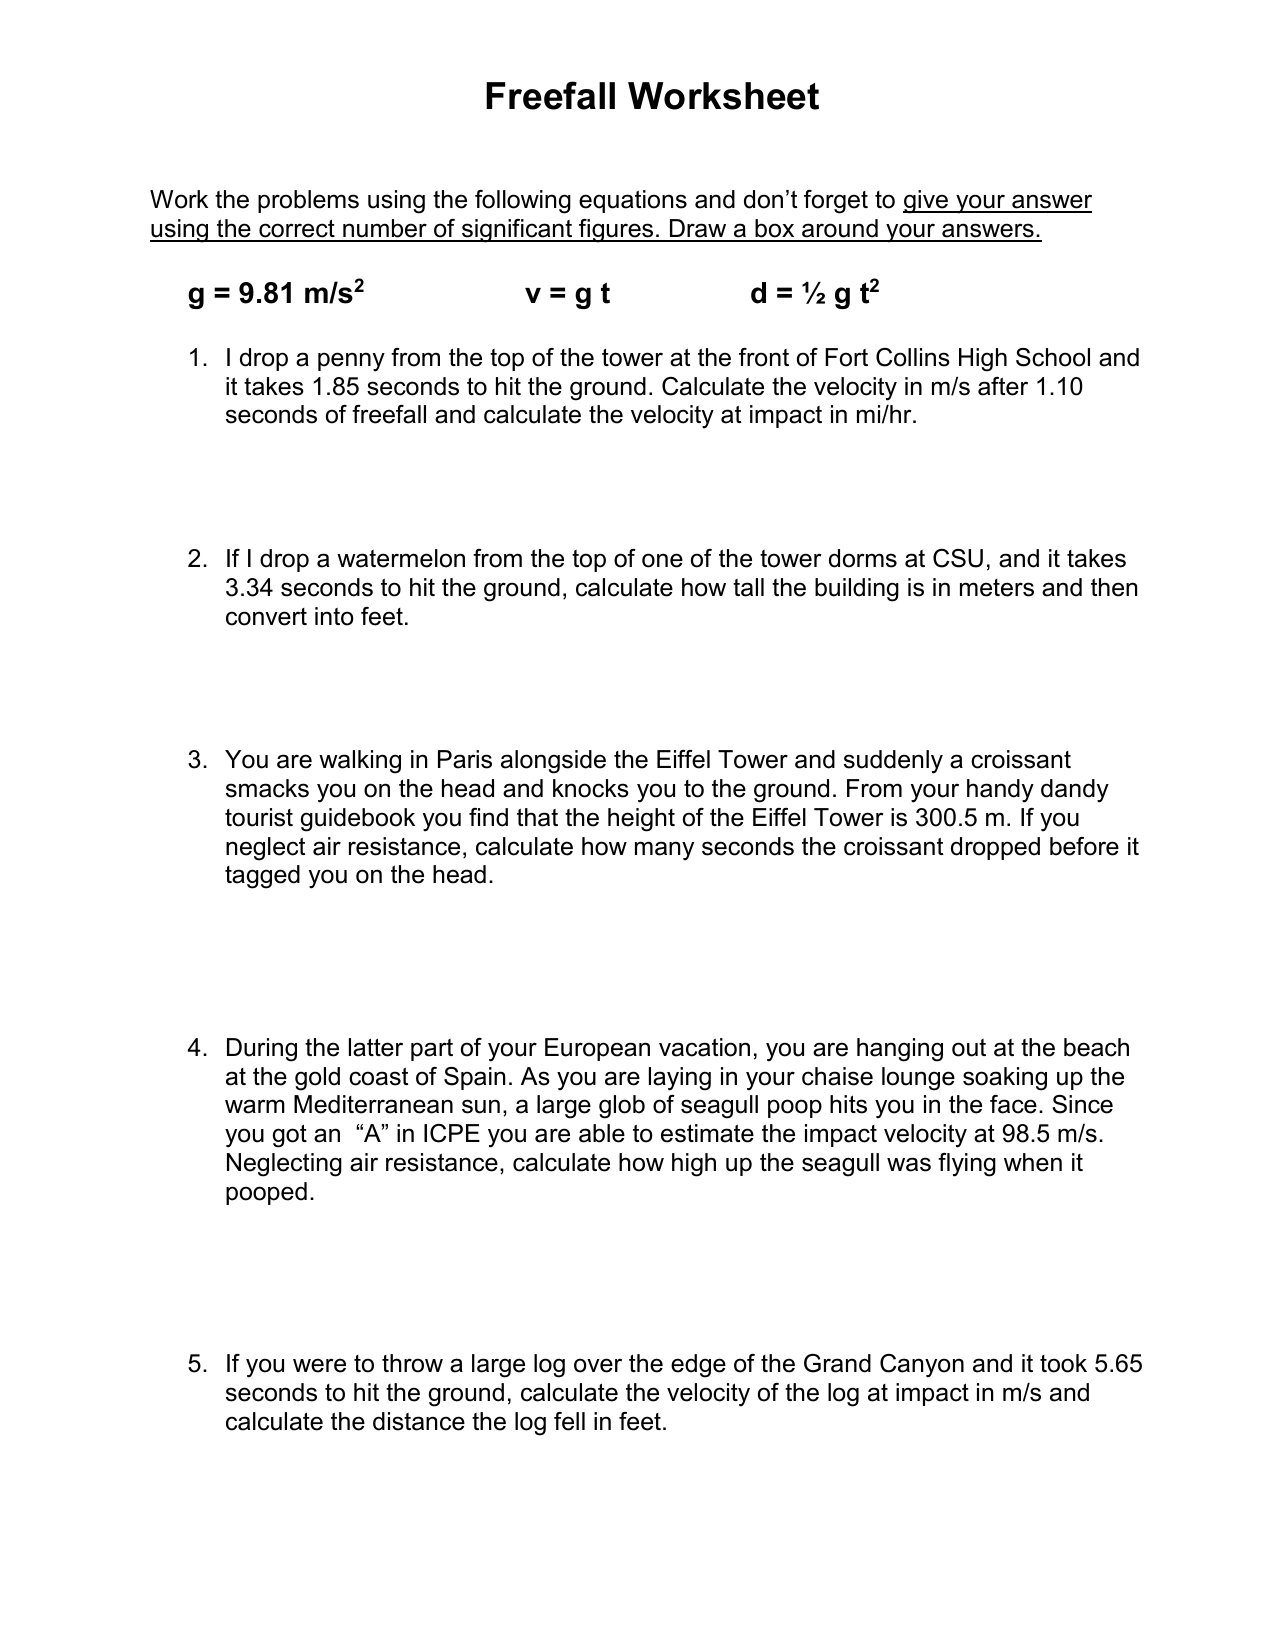 Freefall Worksheet (11) Throughout Free Fall Worksheet Answers